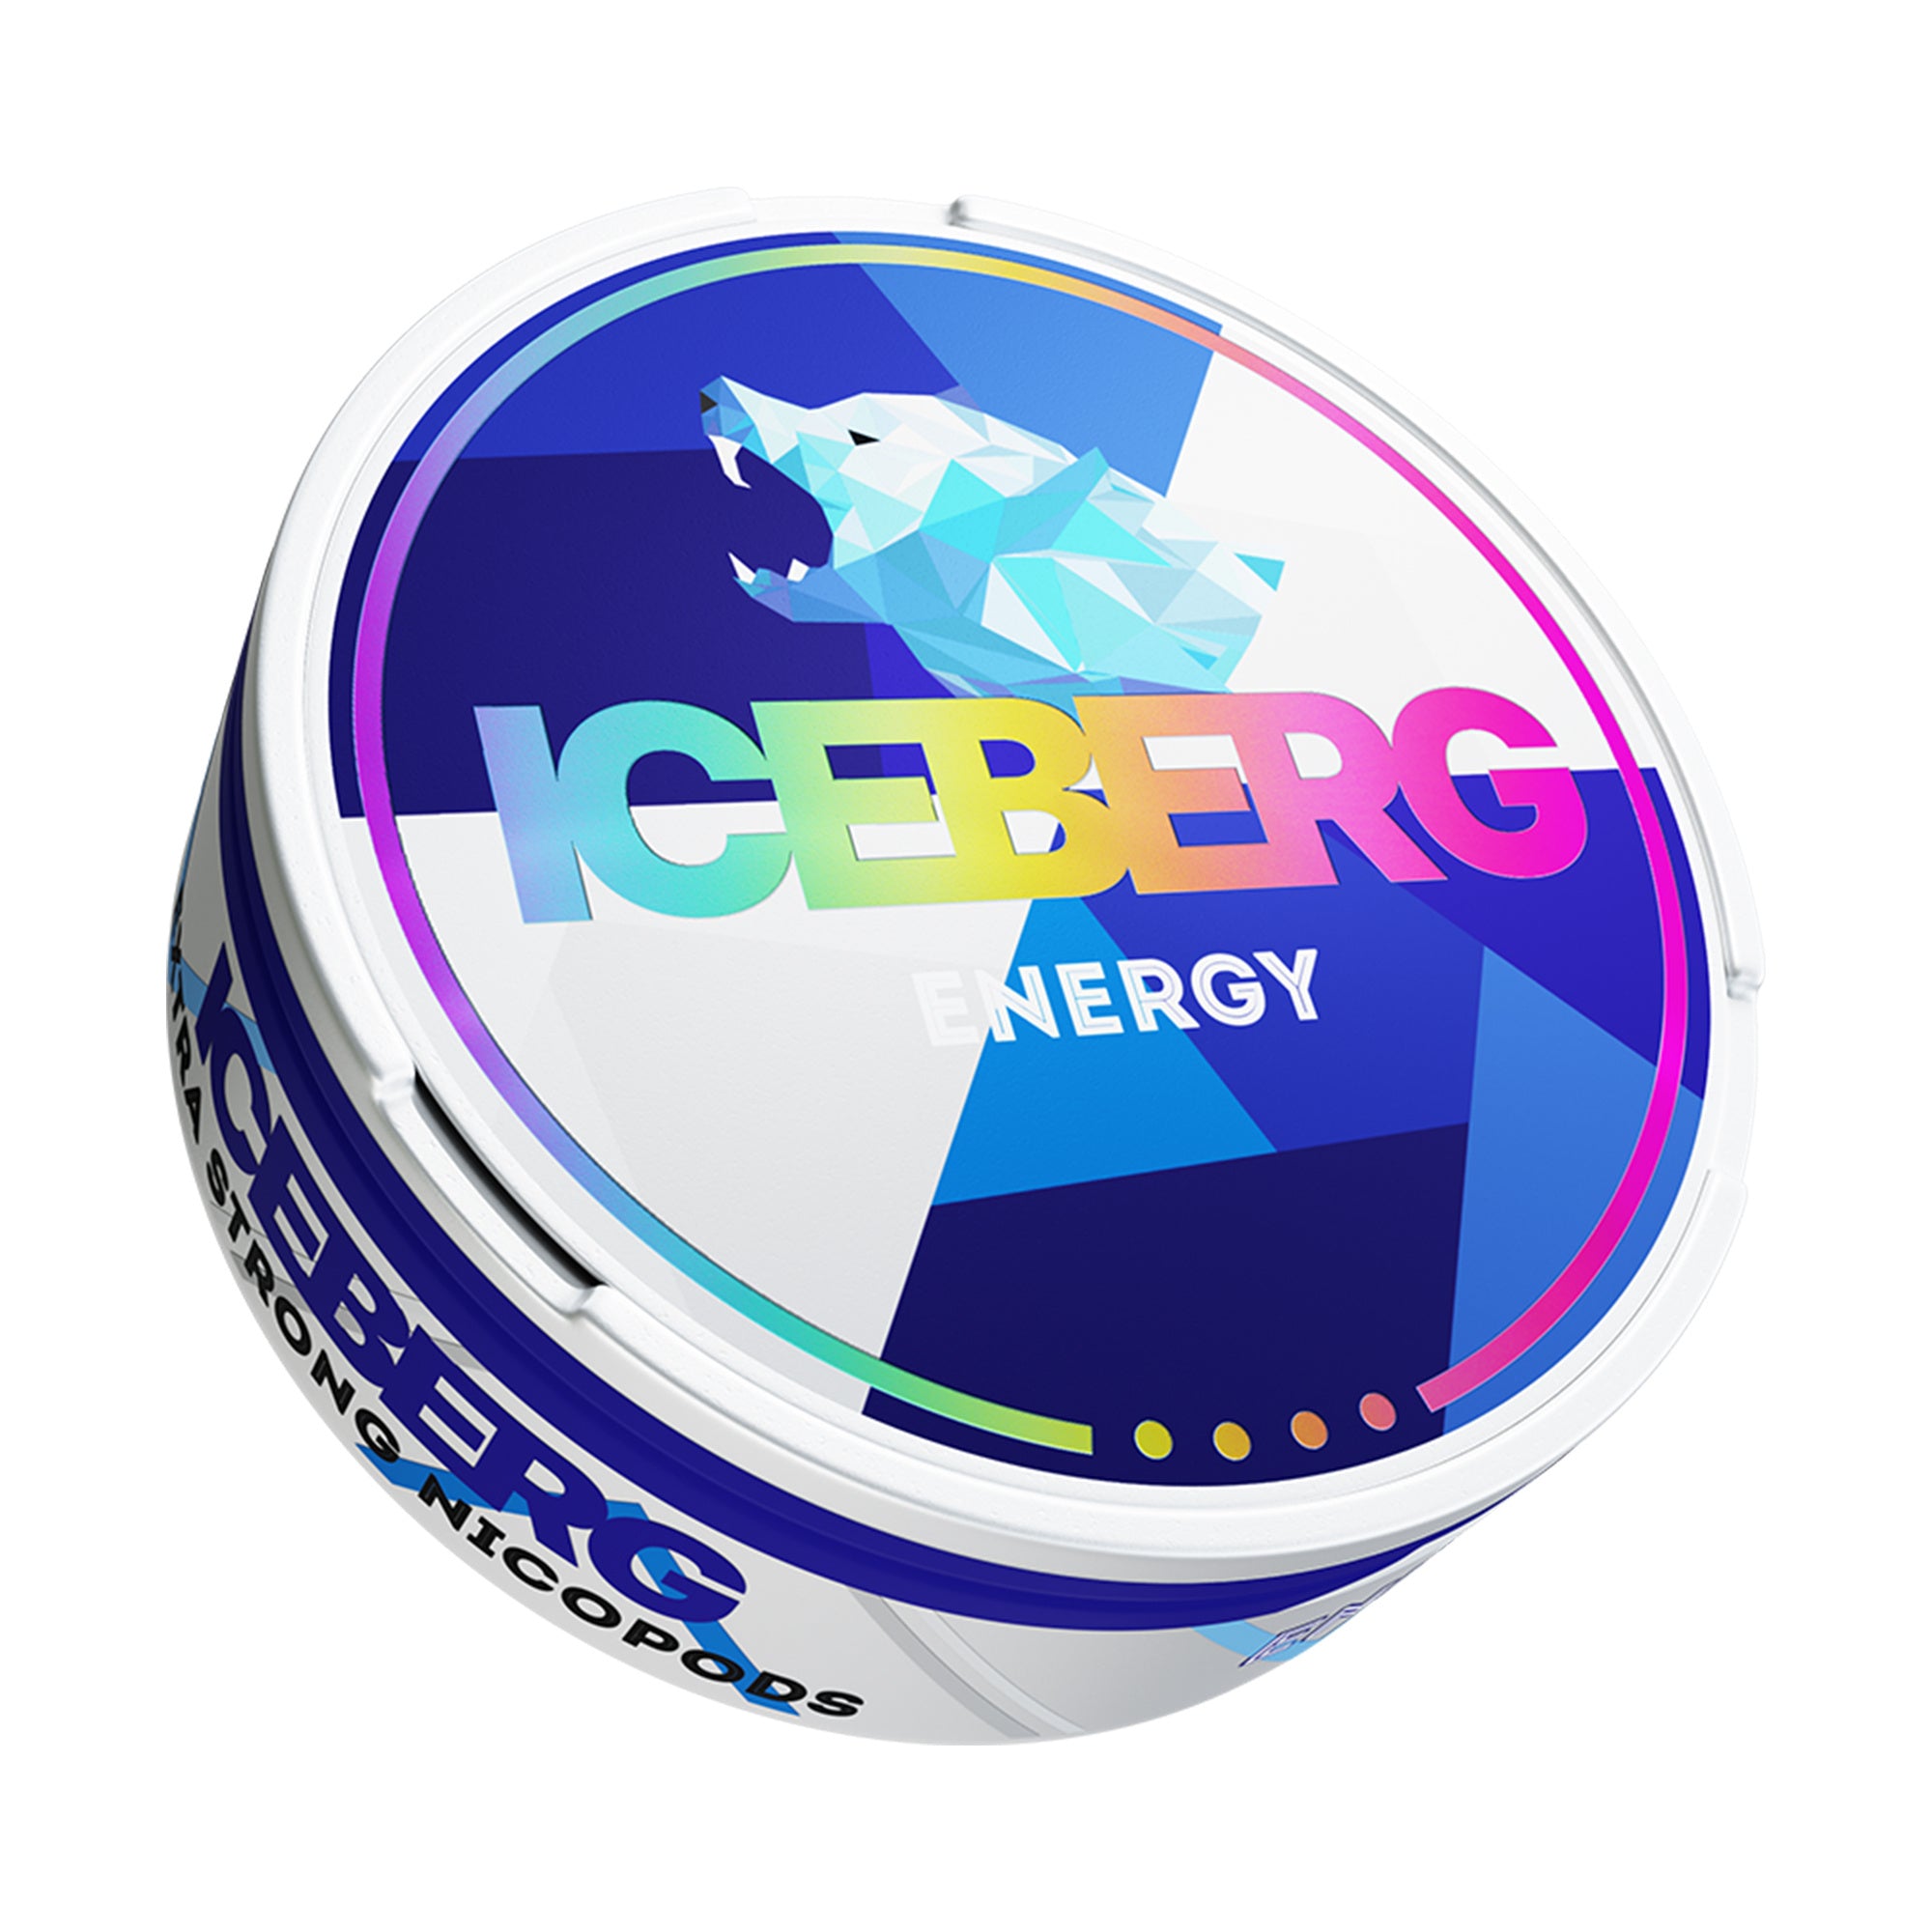 Iceberg Energy - EUK